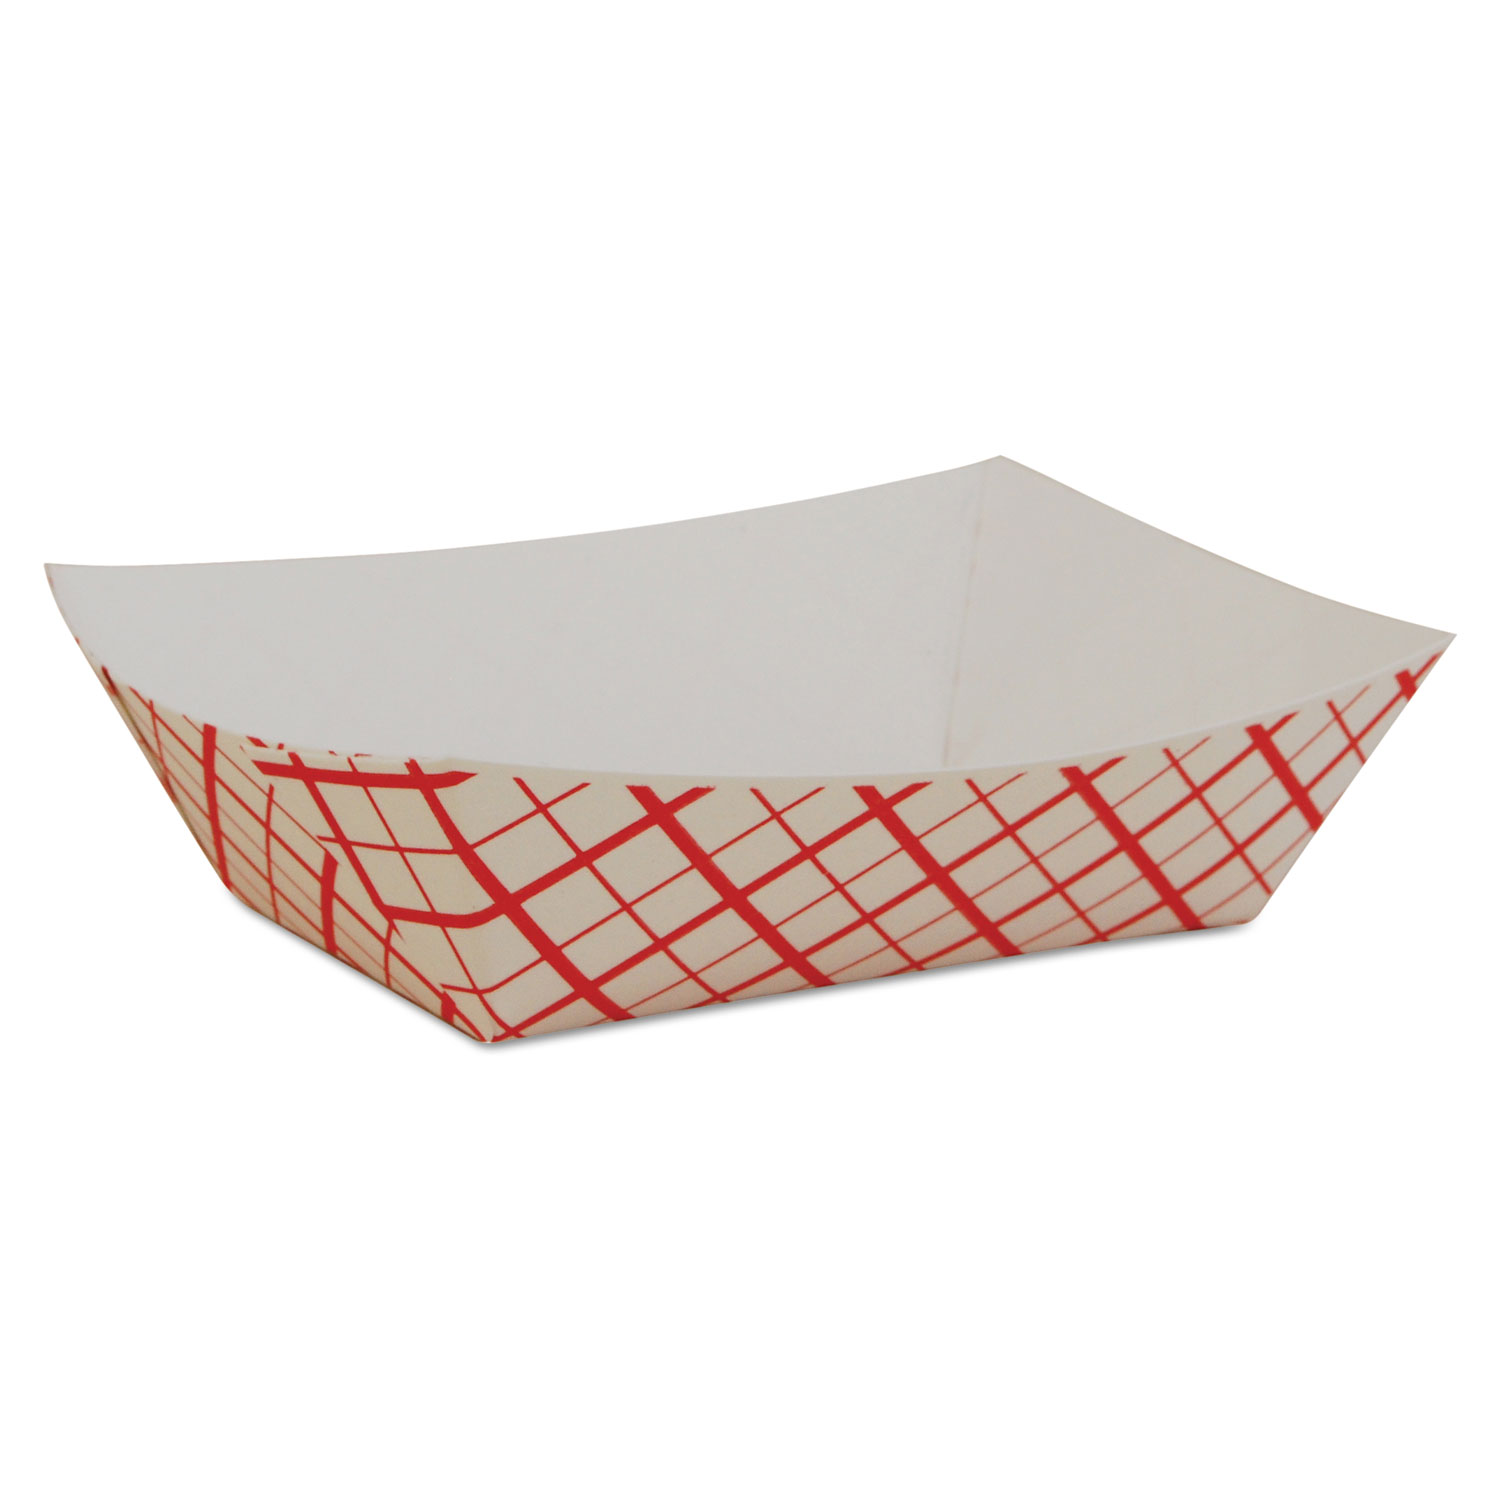  SCT SCH 0409 Paper Food Baskets, Red/White Checkerboard, 1/2 lb Capacity, 1000/Carton (SCH0409) 